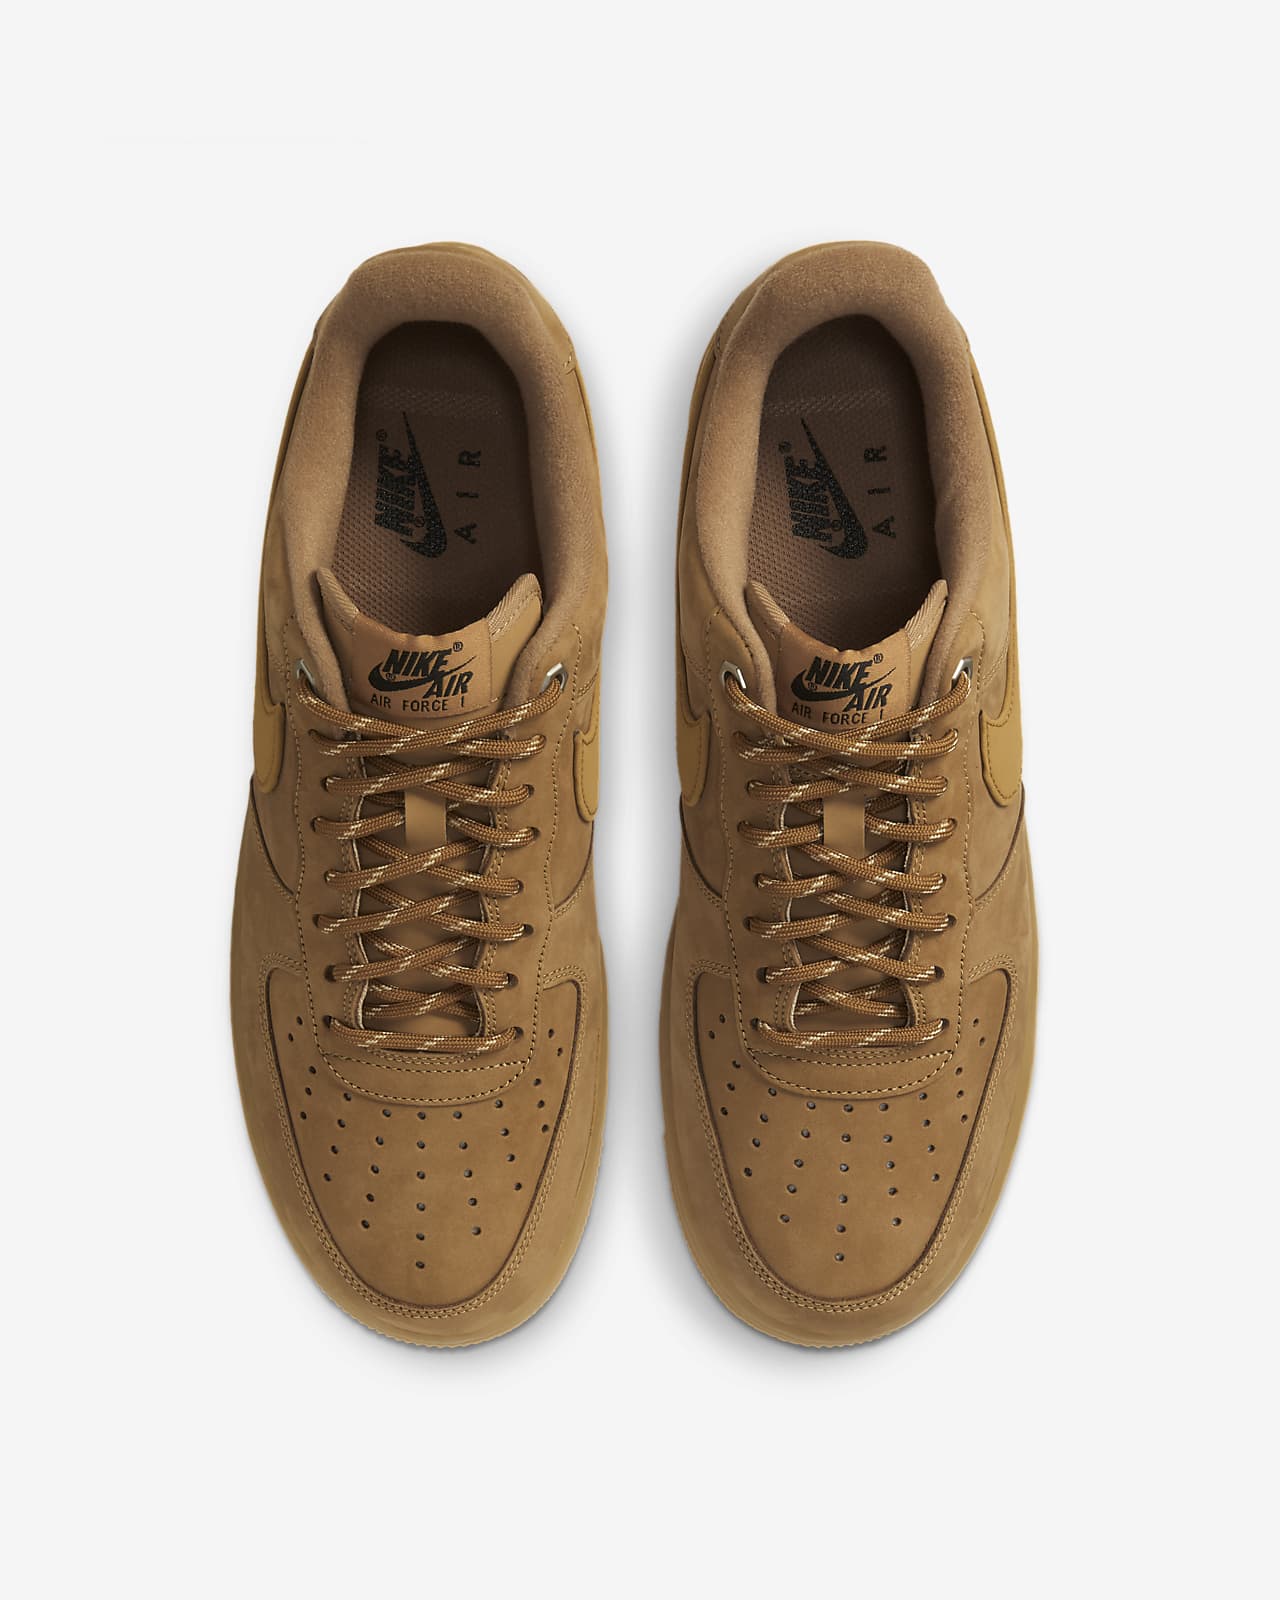 Nike Air Max 1 Premium Men's Shoes Flax/Medium Brown 875844-203